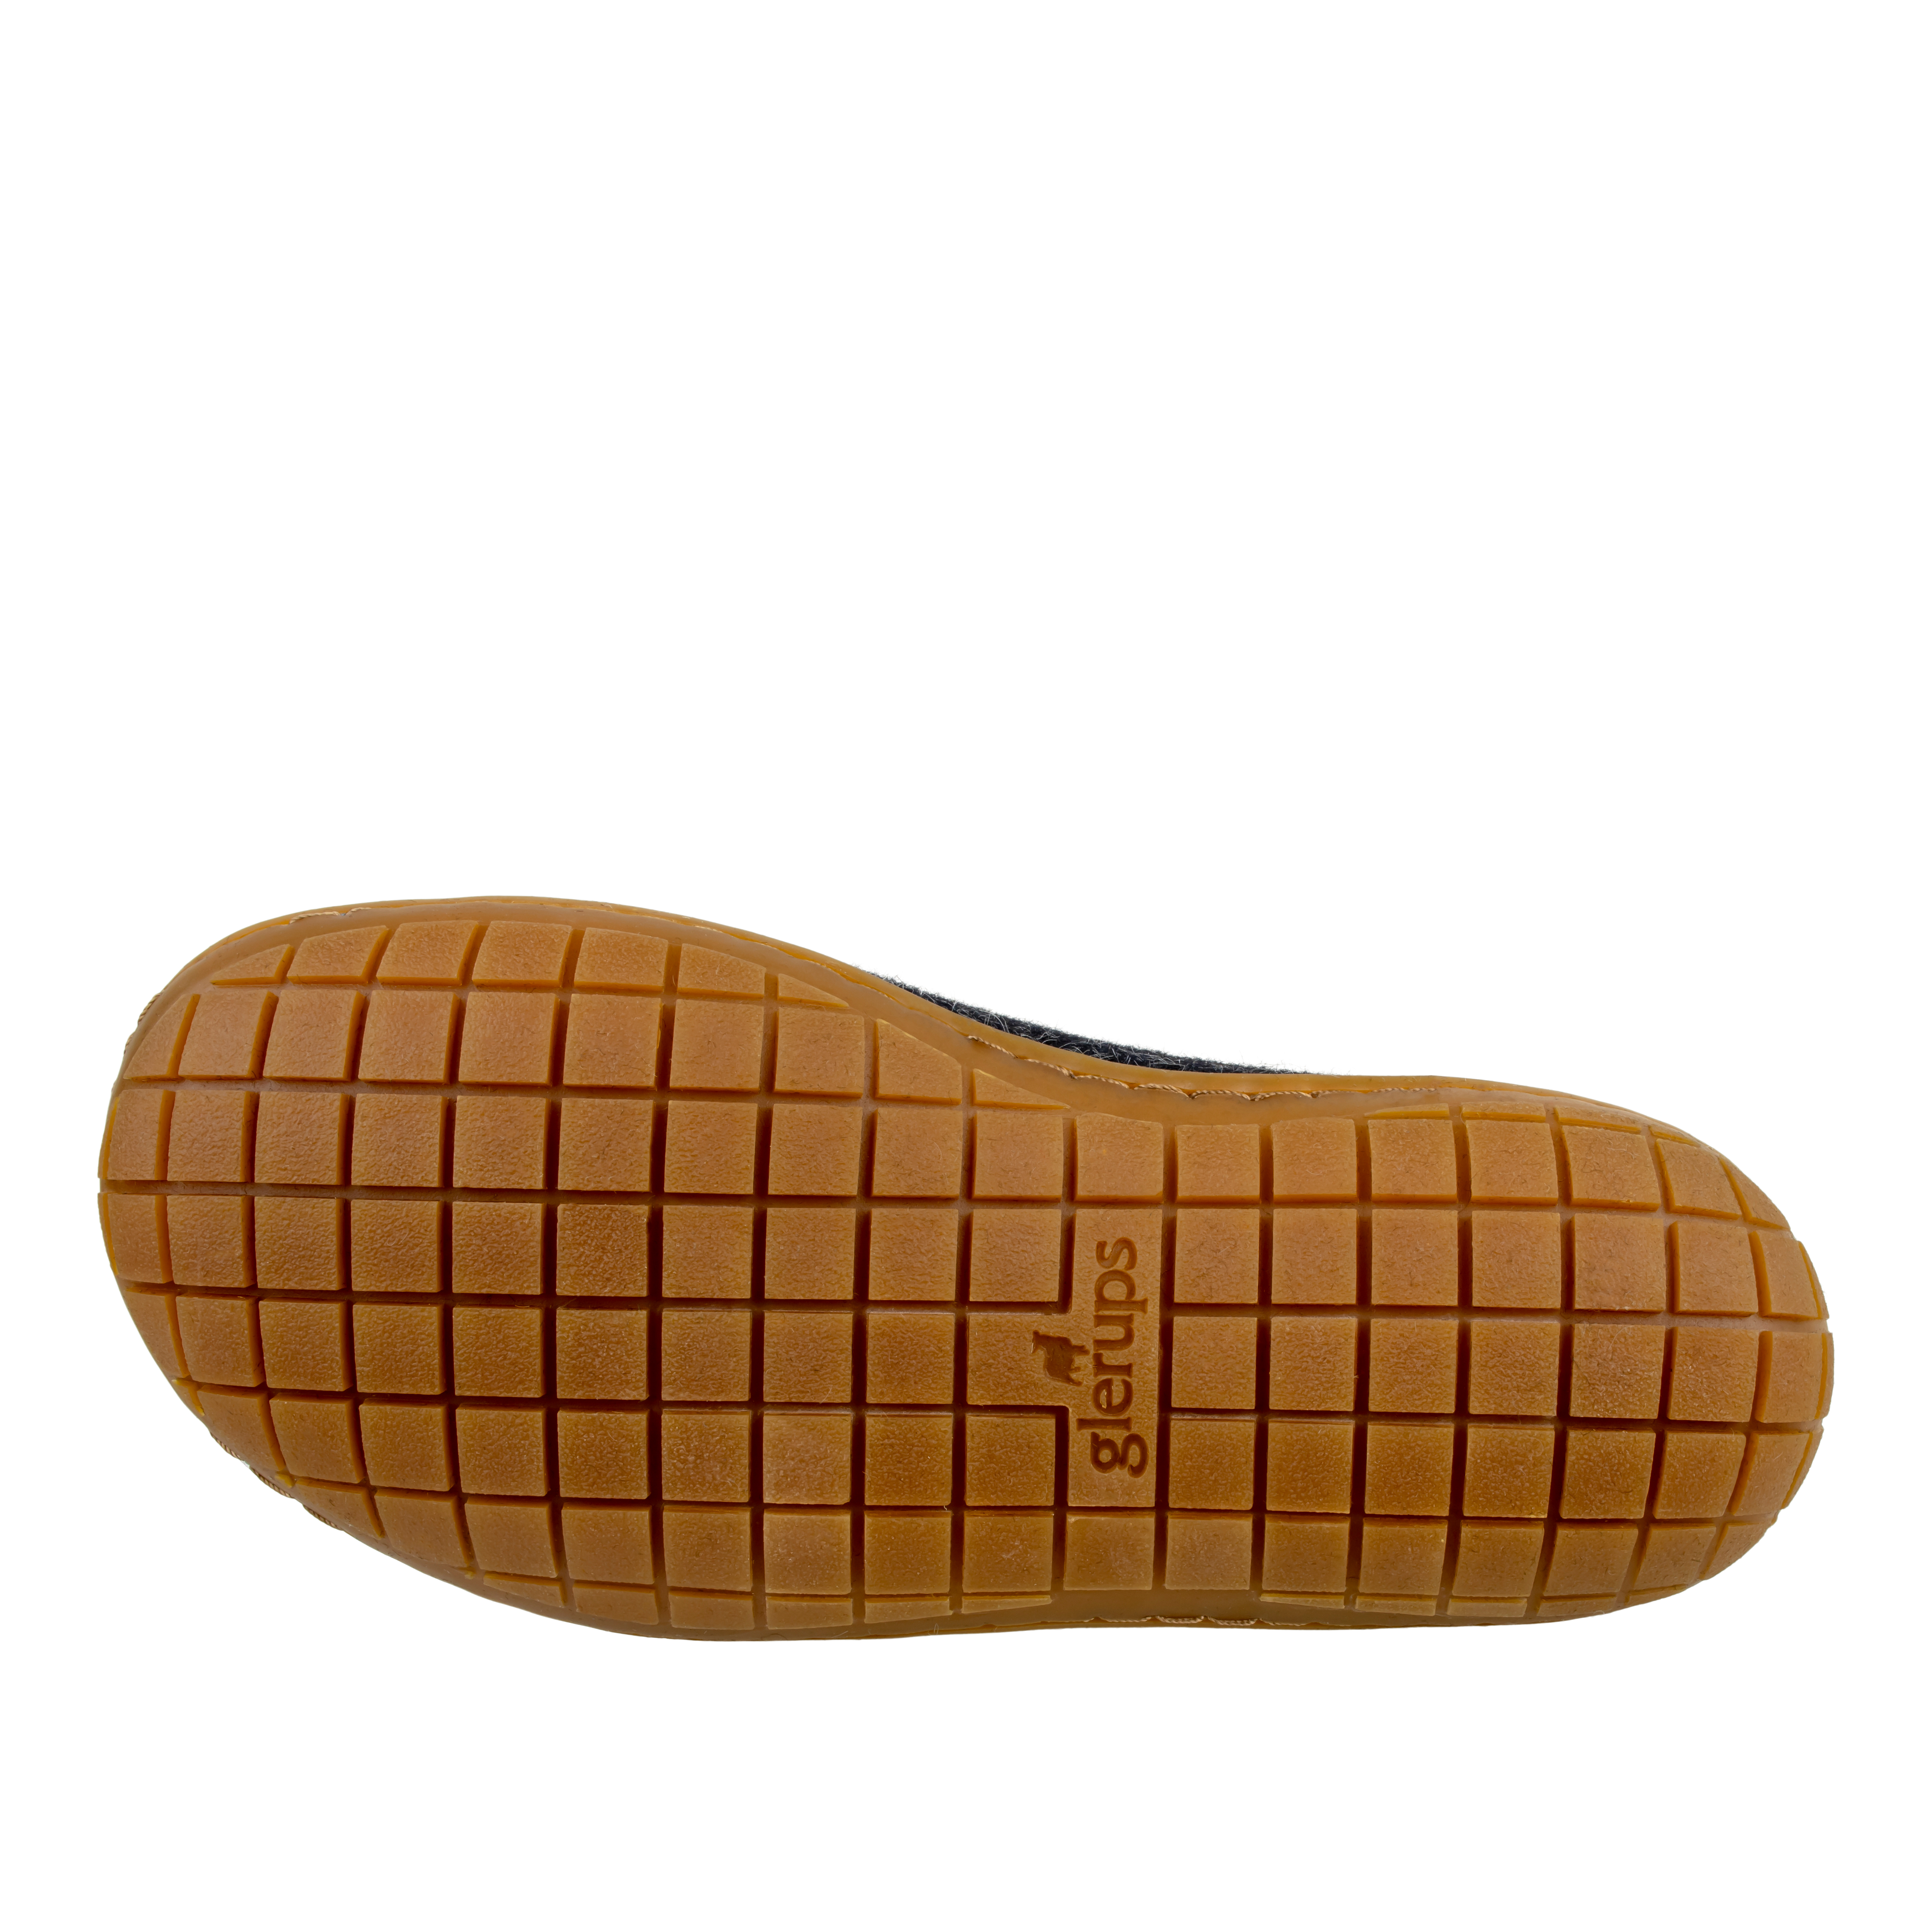 Glerups støvle med naturgummibund, koksgrå, 40